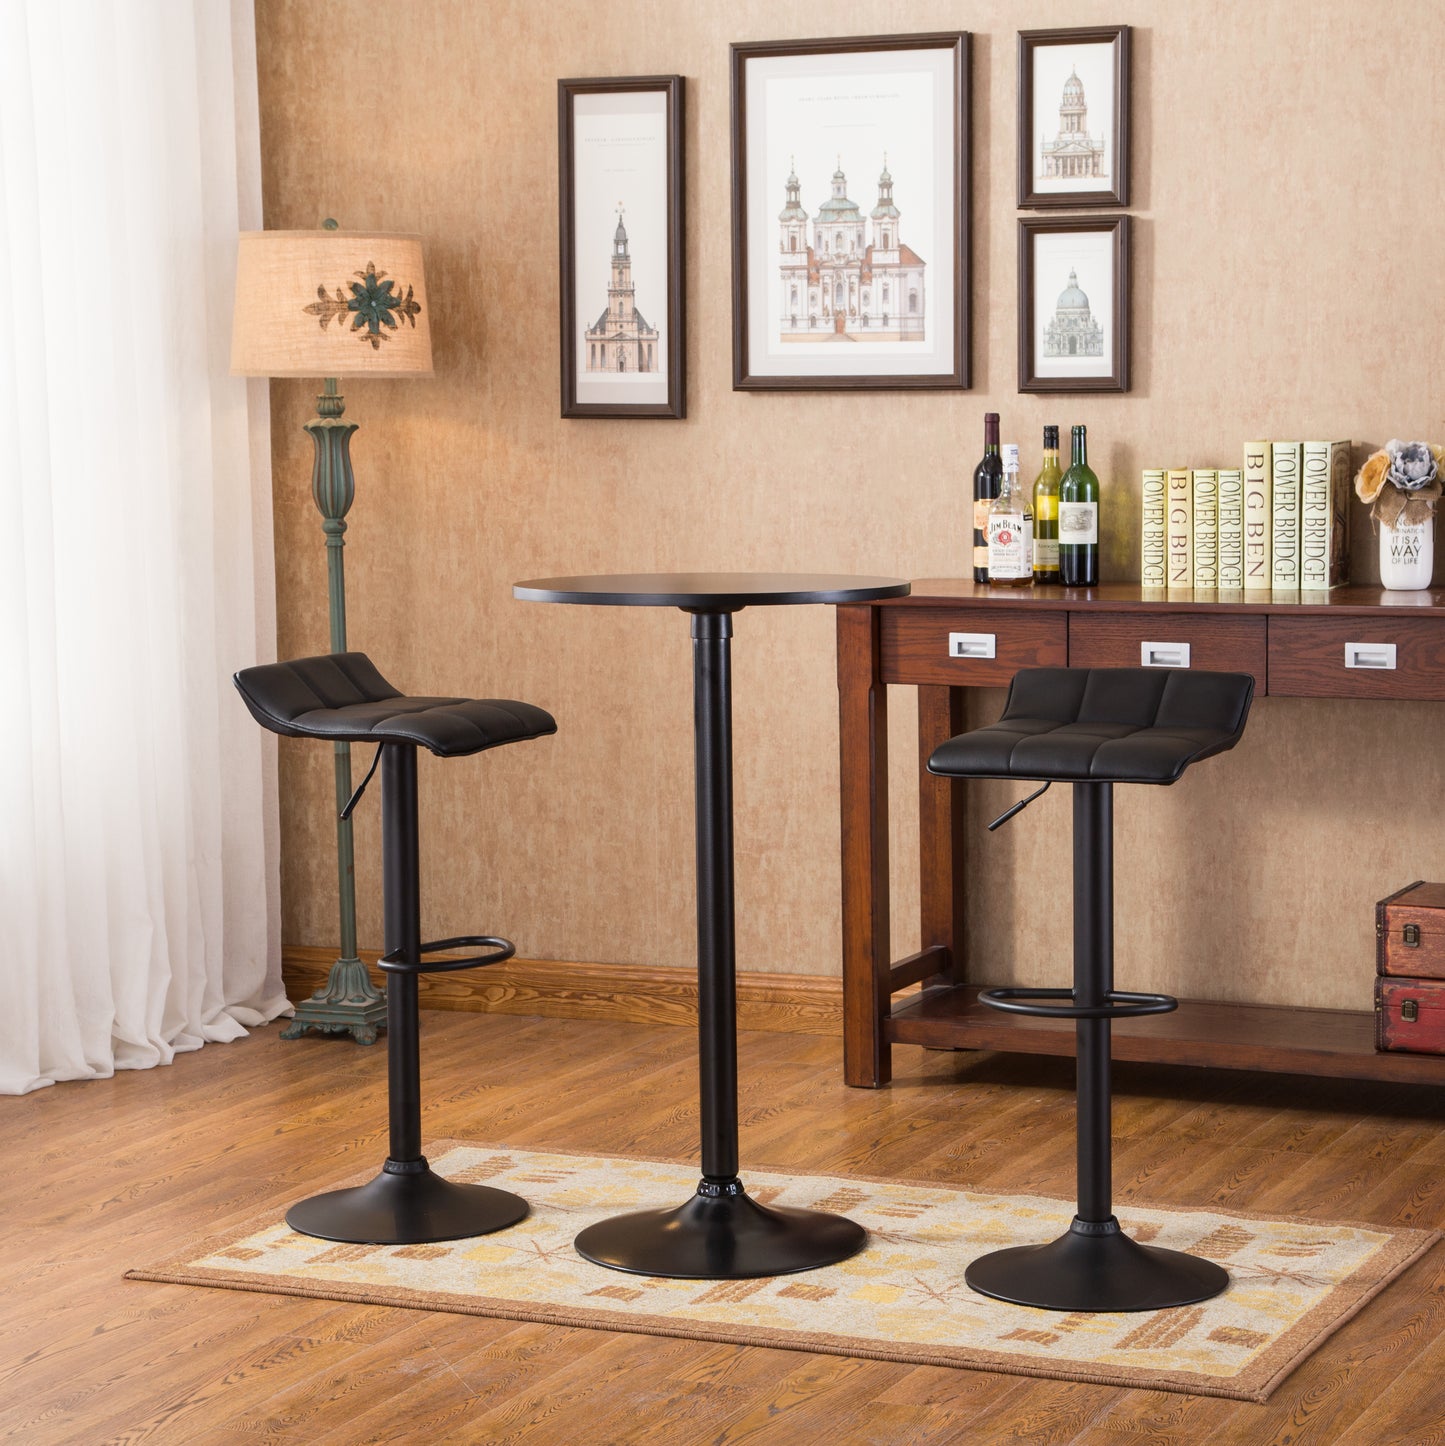 Belham Black Round Top with Black Leg And Base Metal Bar Table and 2 Swivel Black Bonded Leather Adjustable Bar Stool Bar Sets